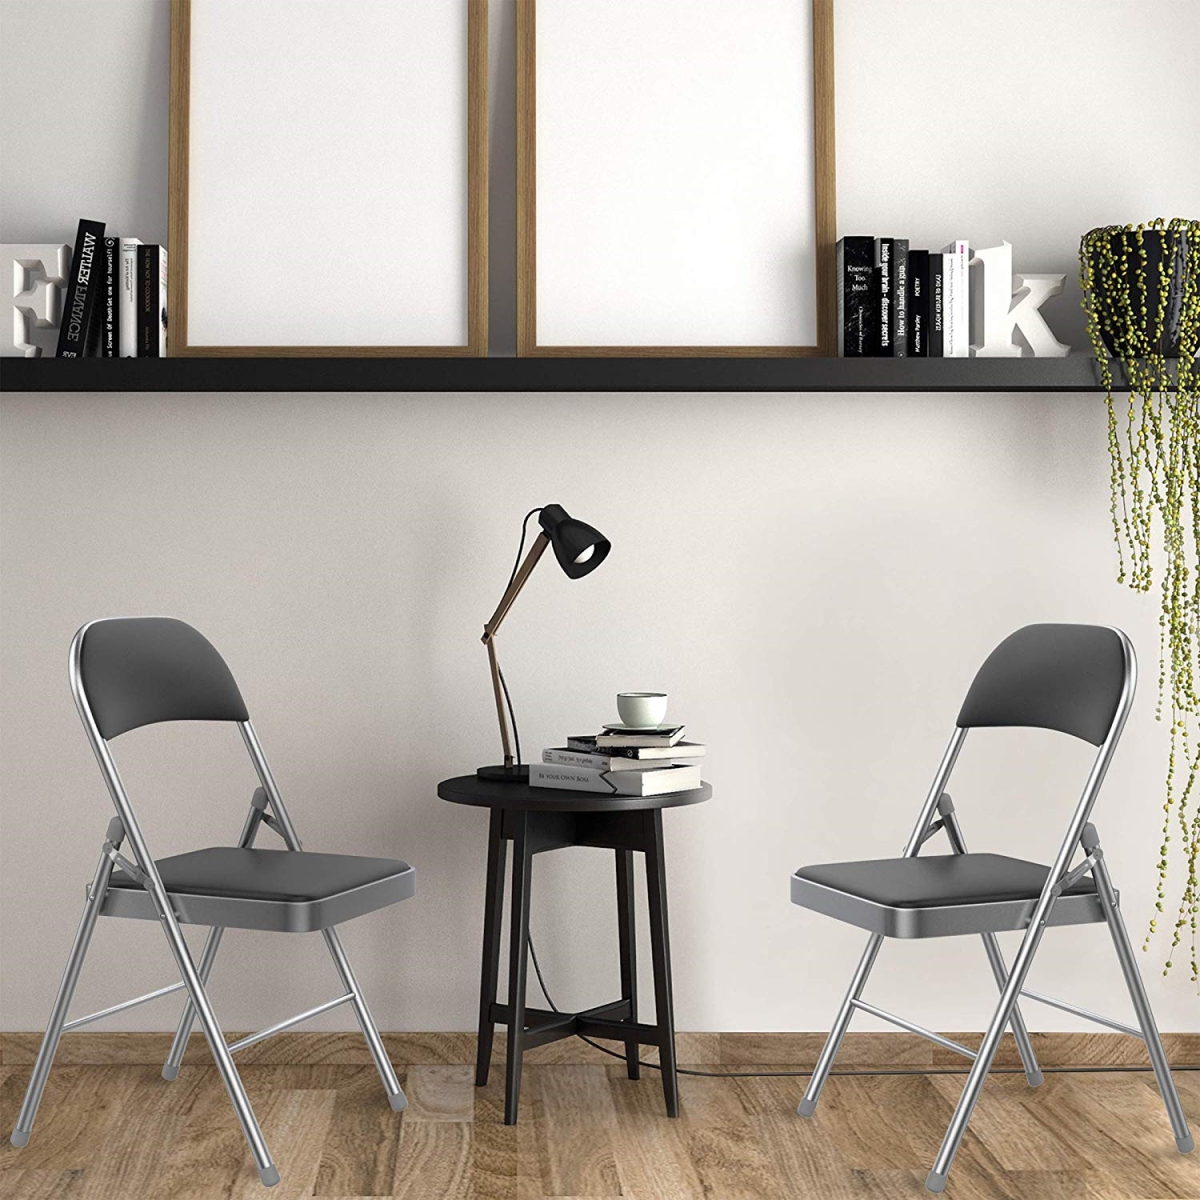 Lavish Home A022286 Folding Chairs, Silver Frame - 2 Piece